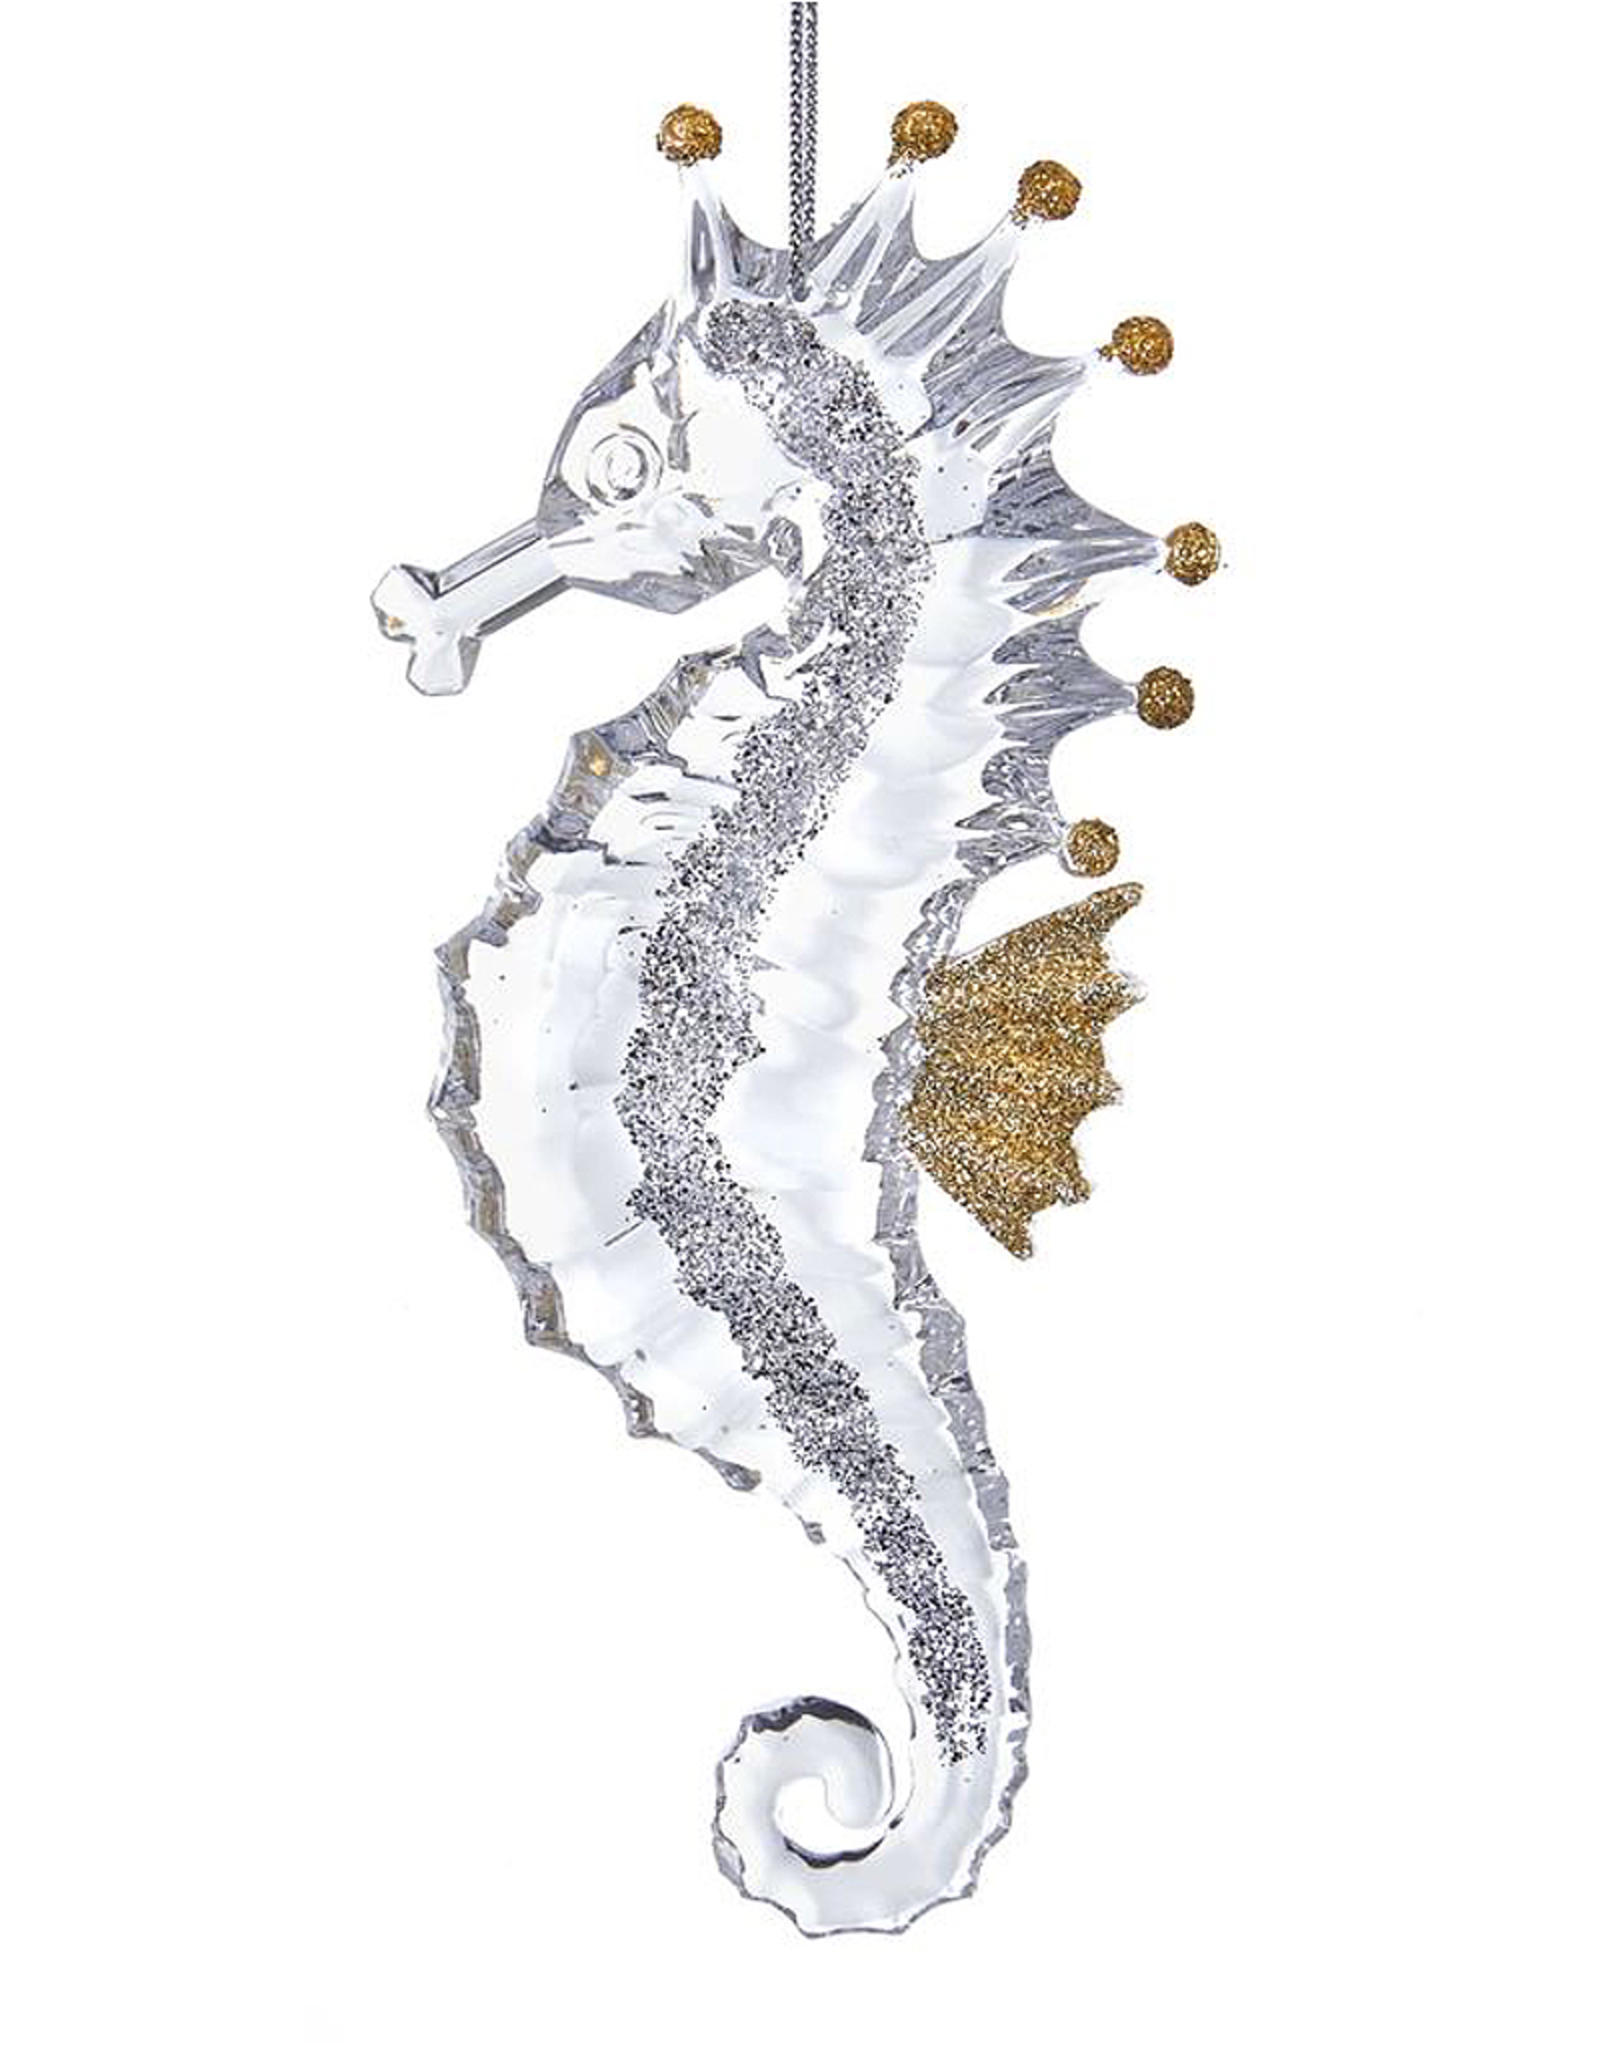 Kurt Adler Clear Acrylic Seahorse Ornament 5 inch - Gold Fins